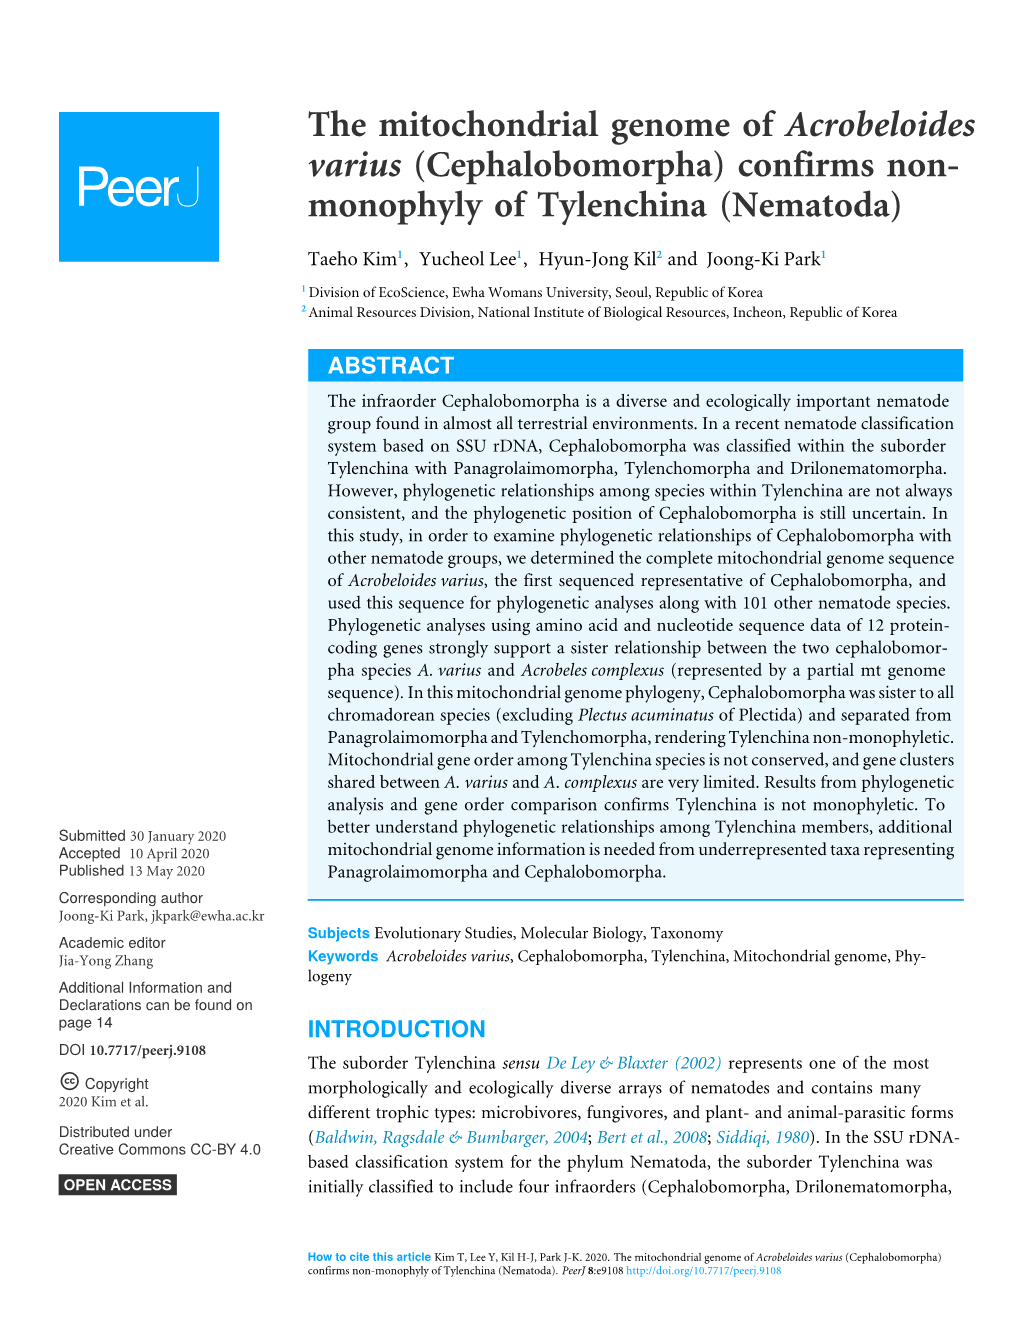 The Mitochondrial Genome of Acrobeloides Varius (Cephalobomorpha) Confirms Non- Monophyly of Tylenchina (Nematoda)